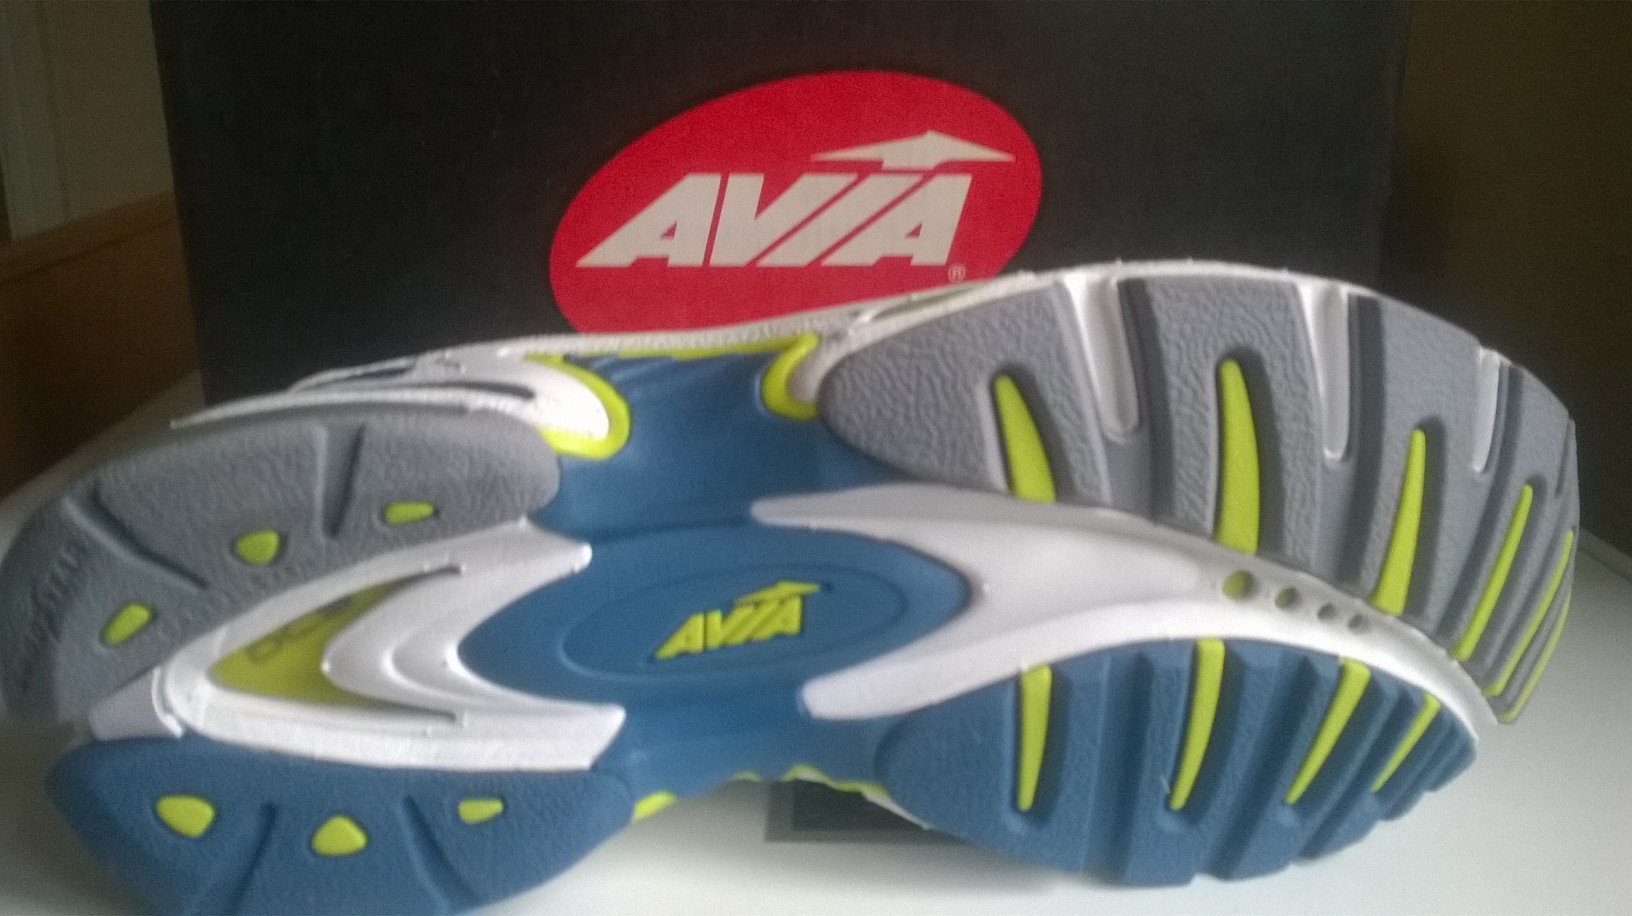 avia women's running shoes